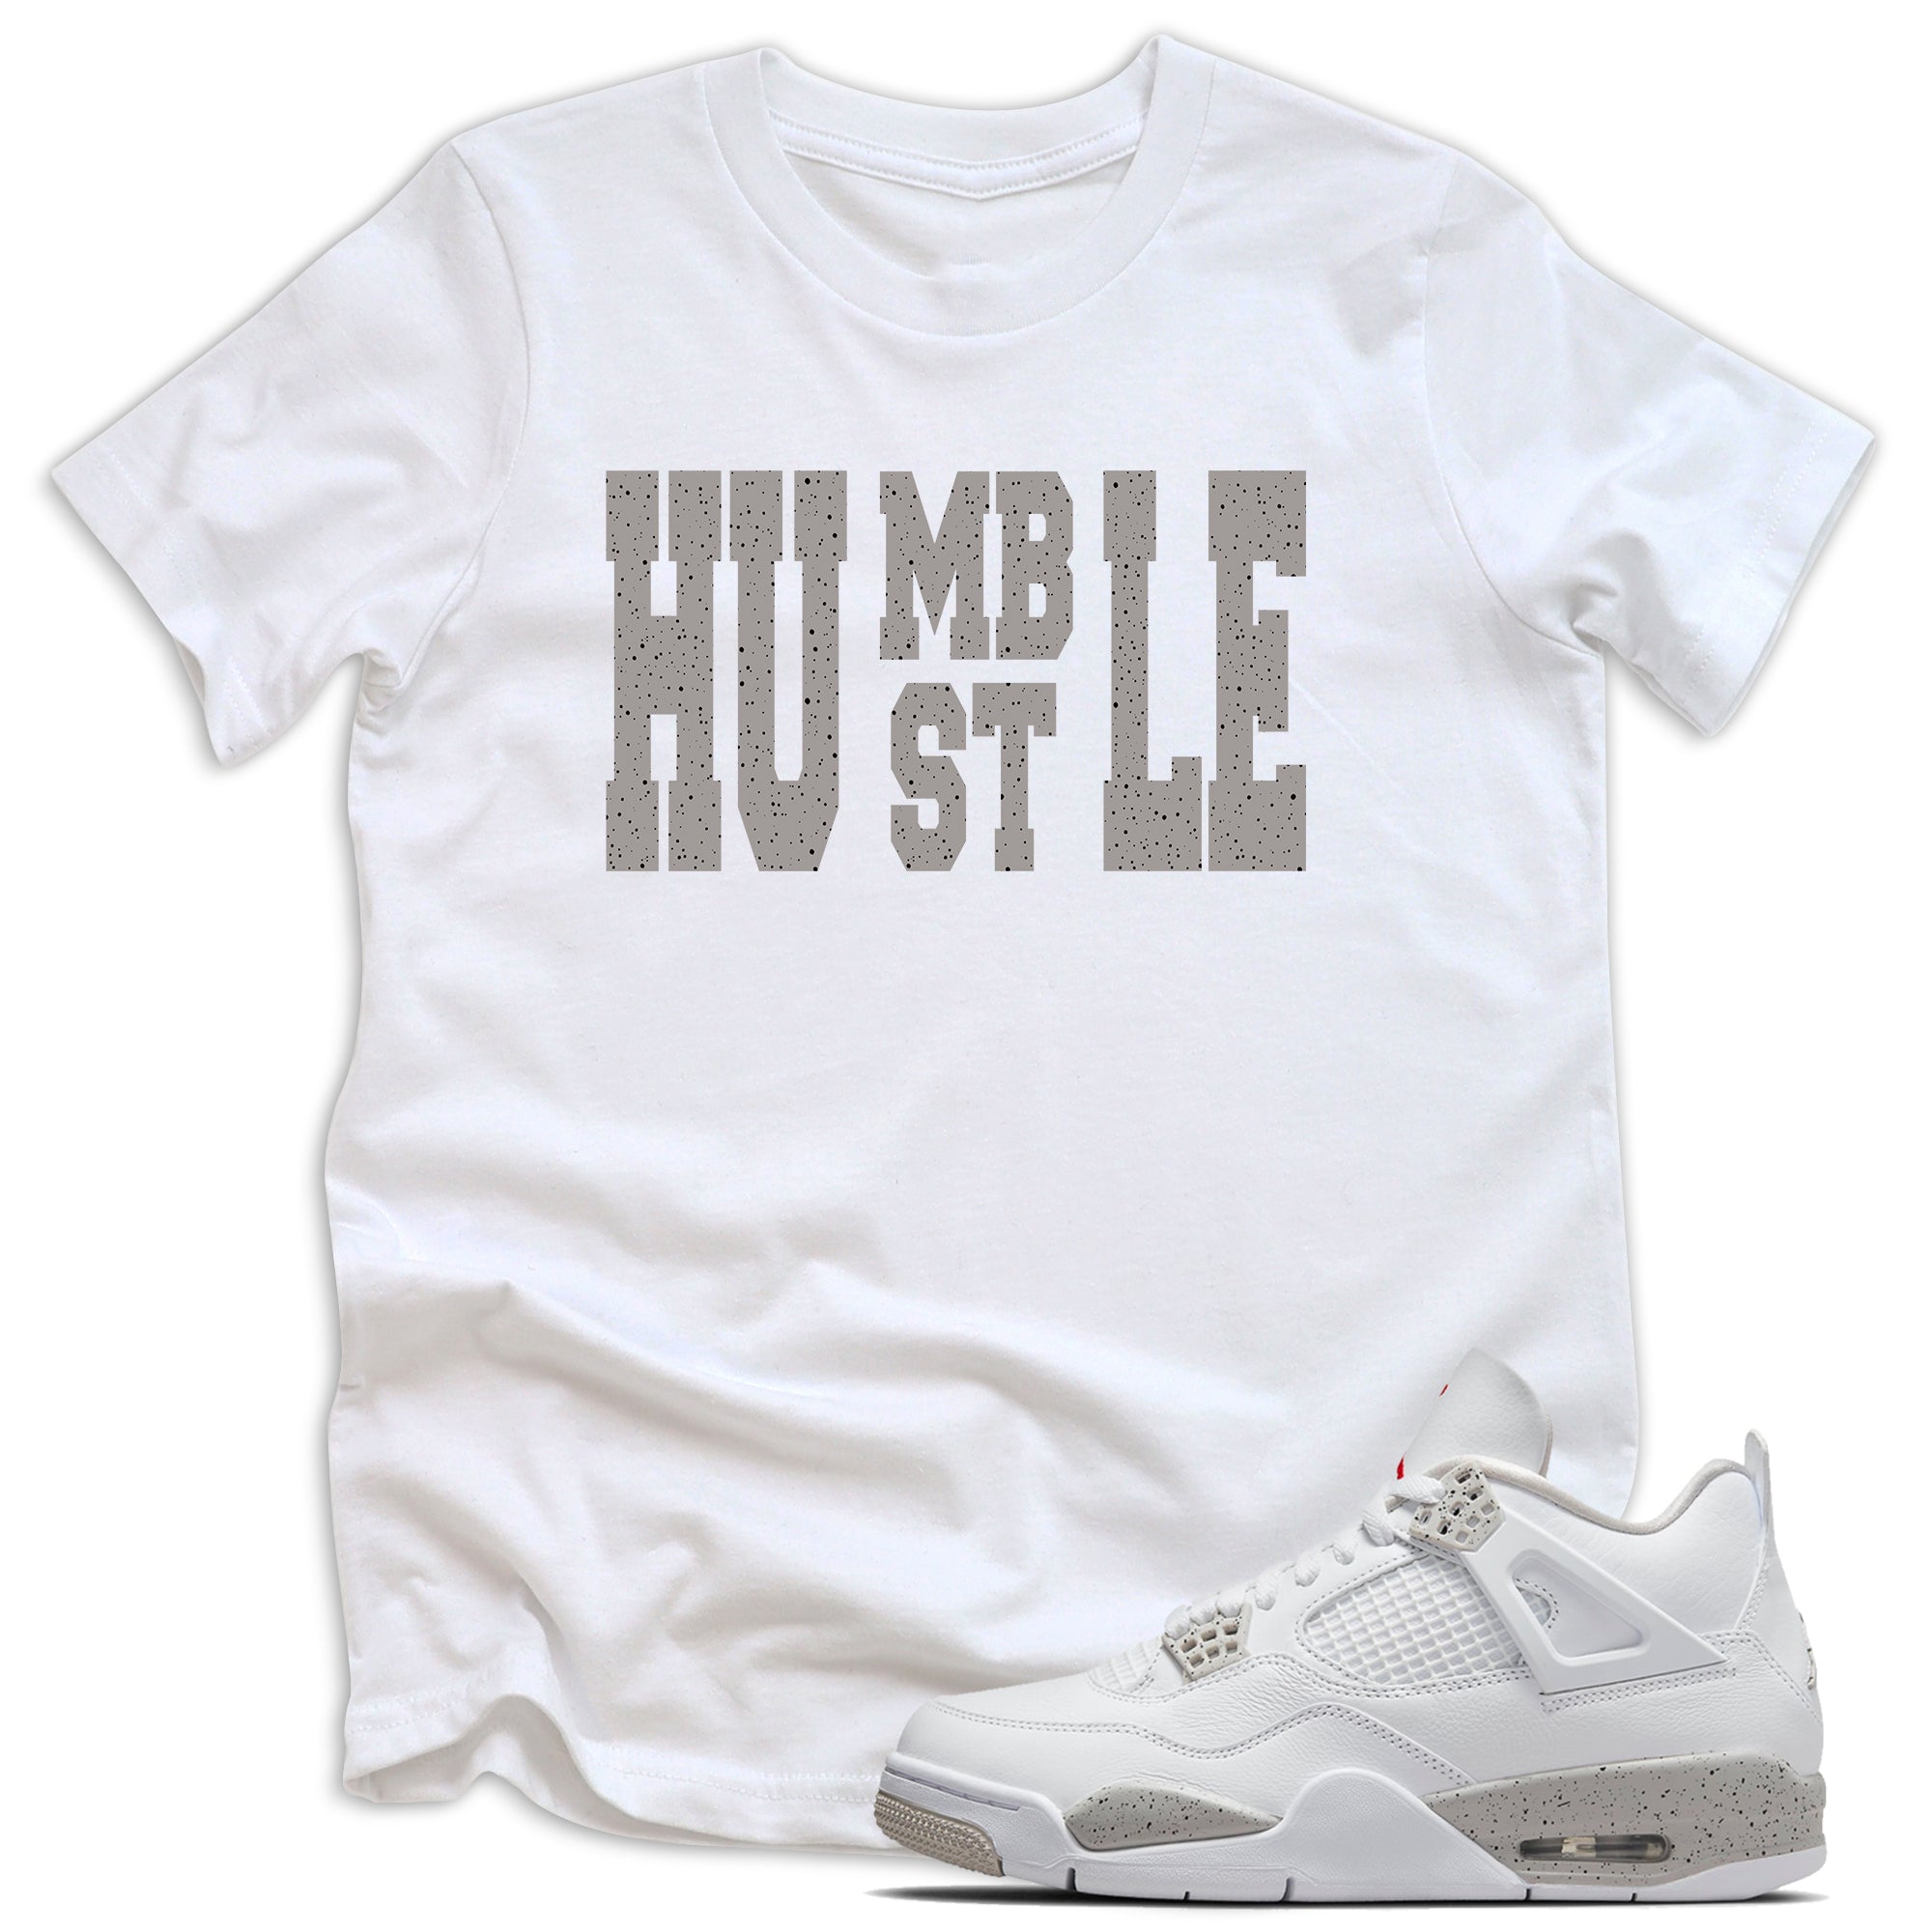 Humble Hustle Shirt AJ 4 Retro White Oreo photo